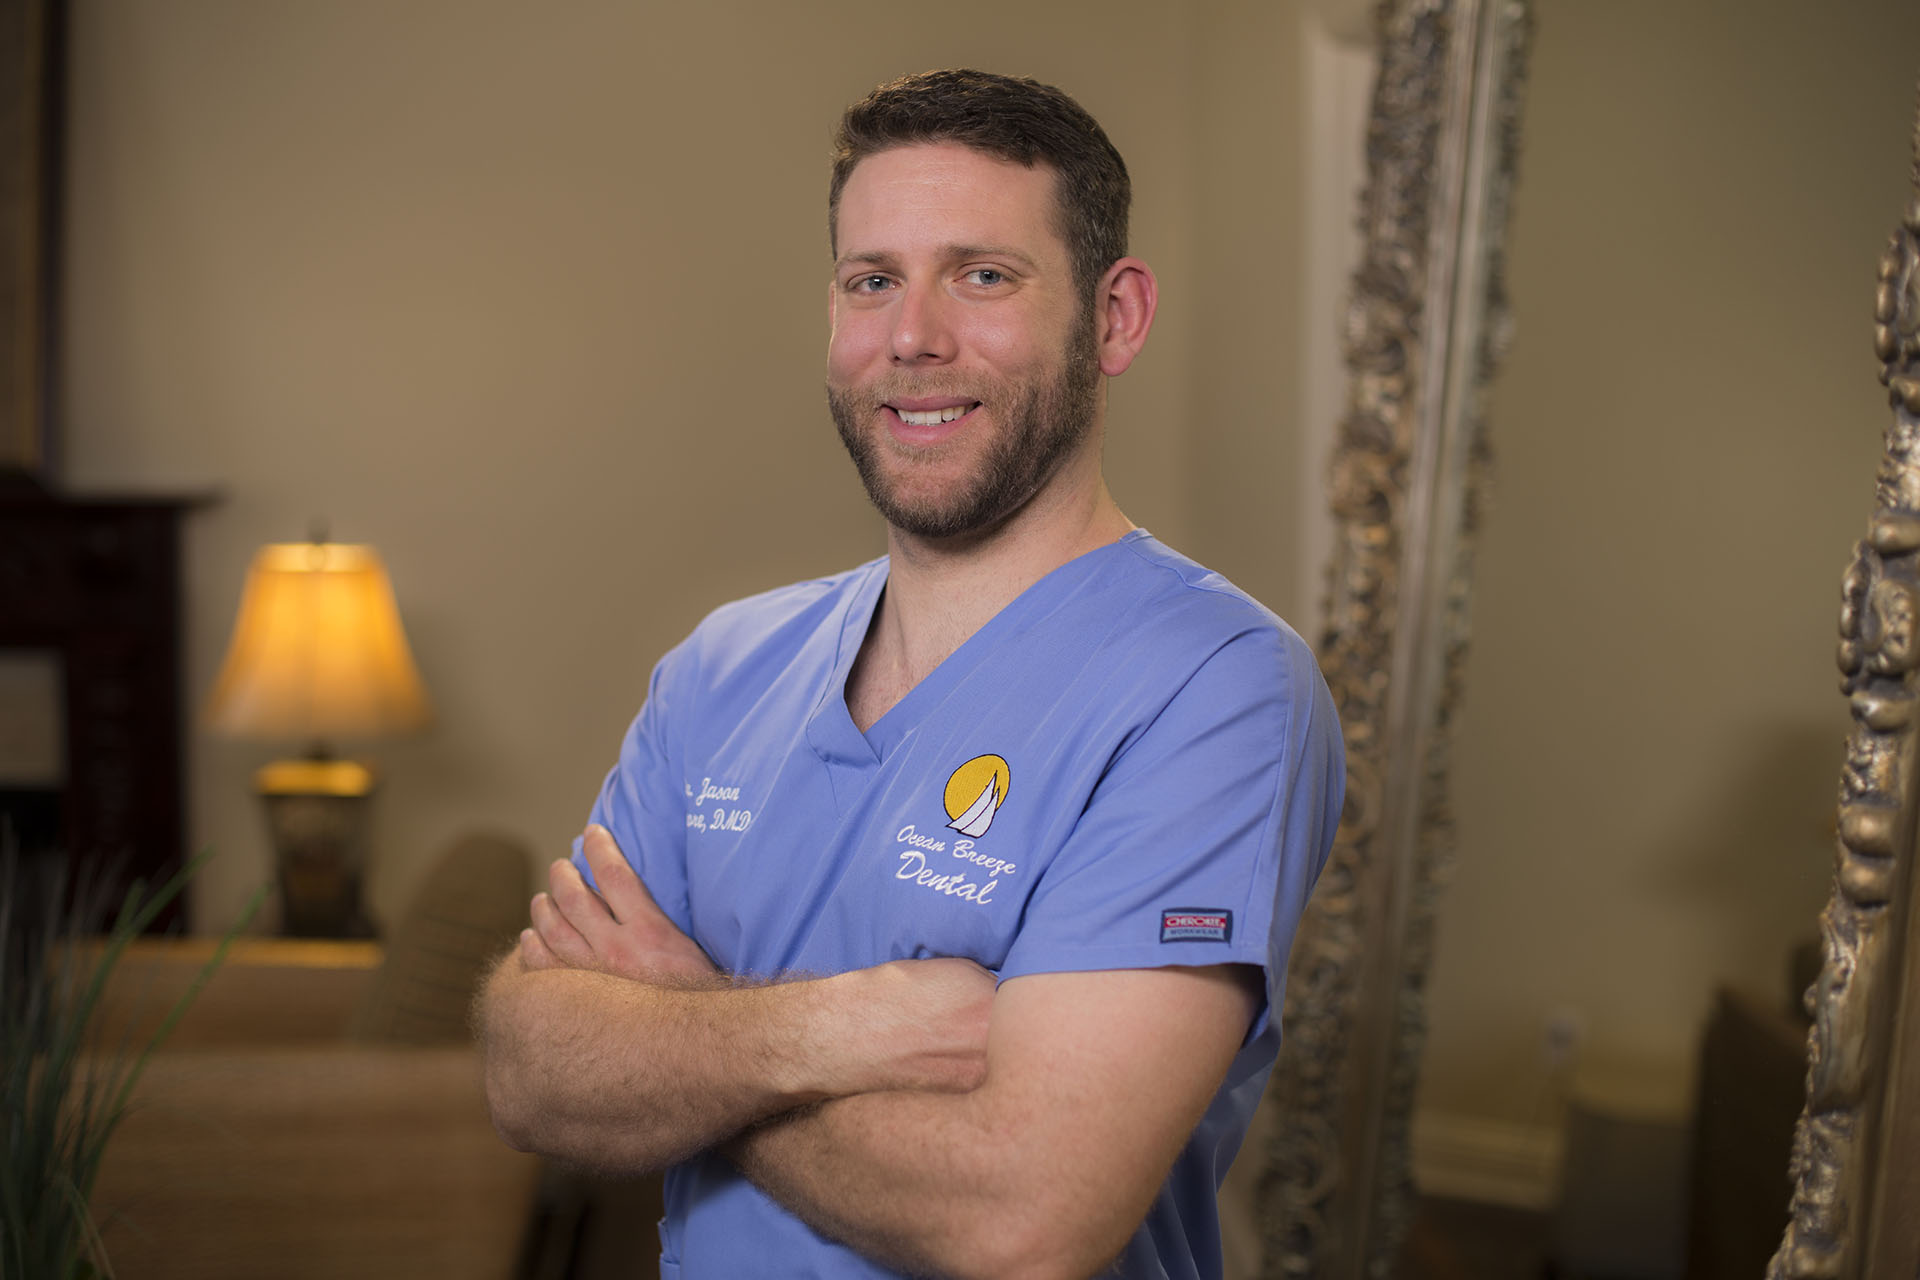 Dr. Jason A. Wetmore, DMD Sedation Dentistry and Dental Surgery